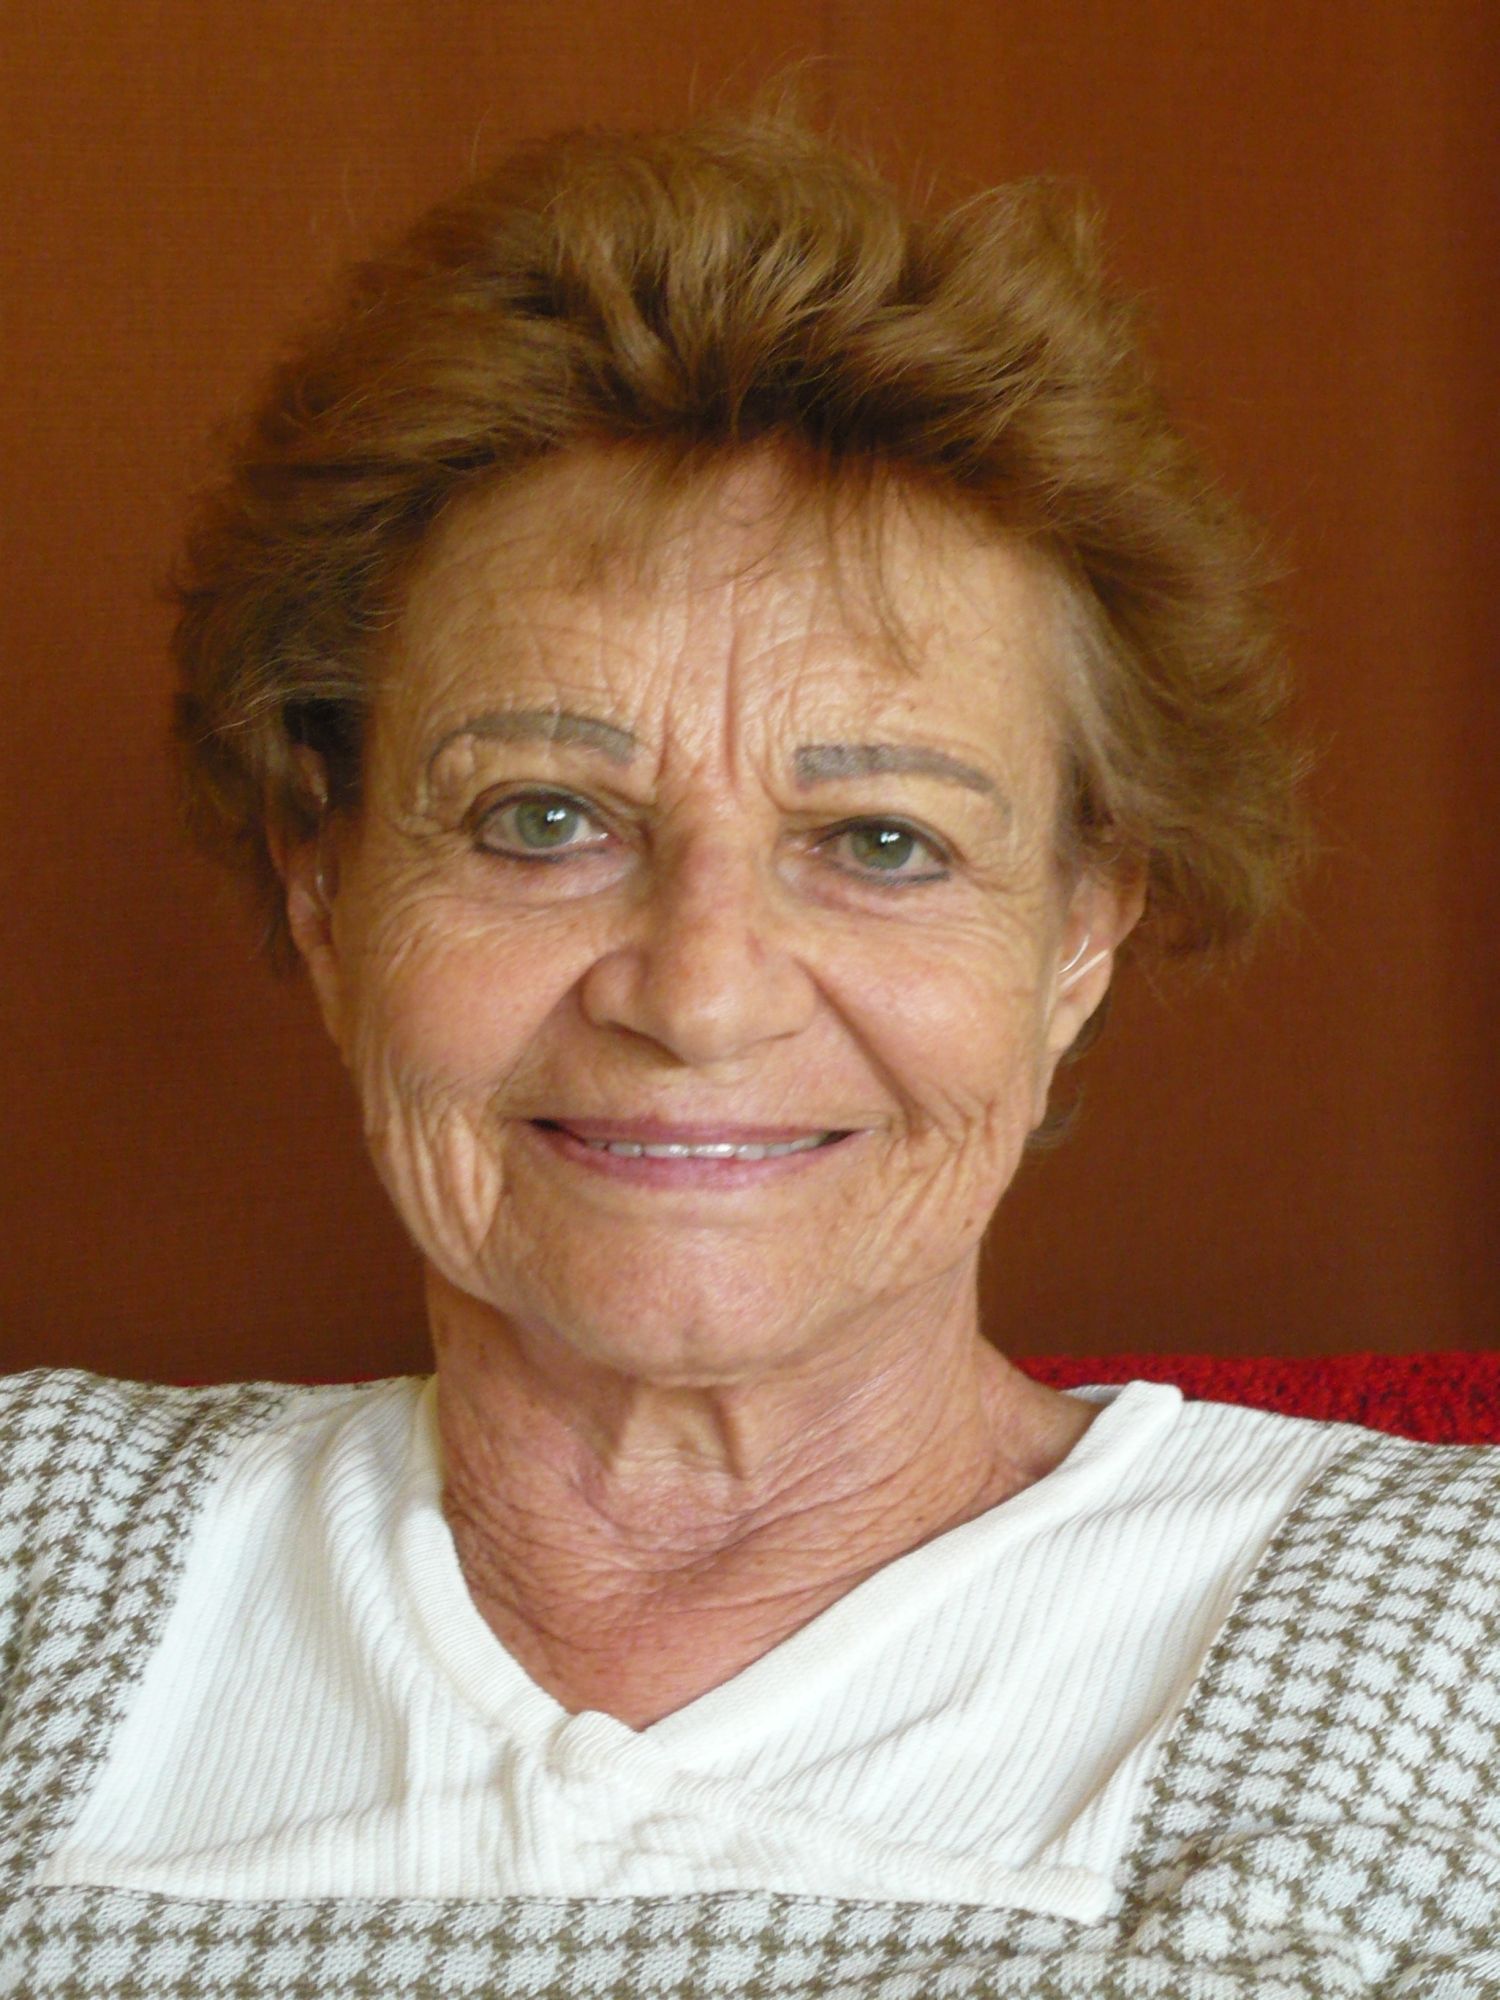 Ilsa Maier during the interwiew - Prague, august 2009